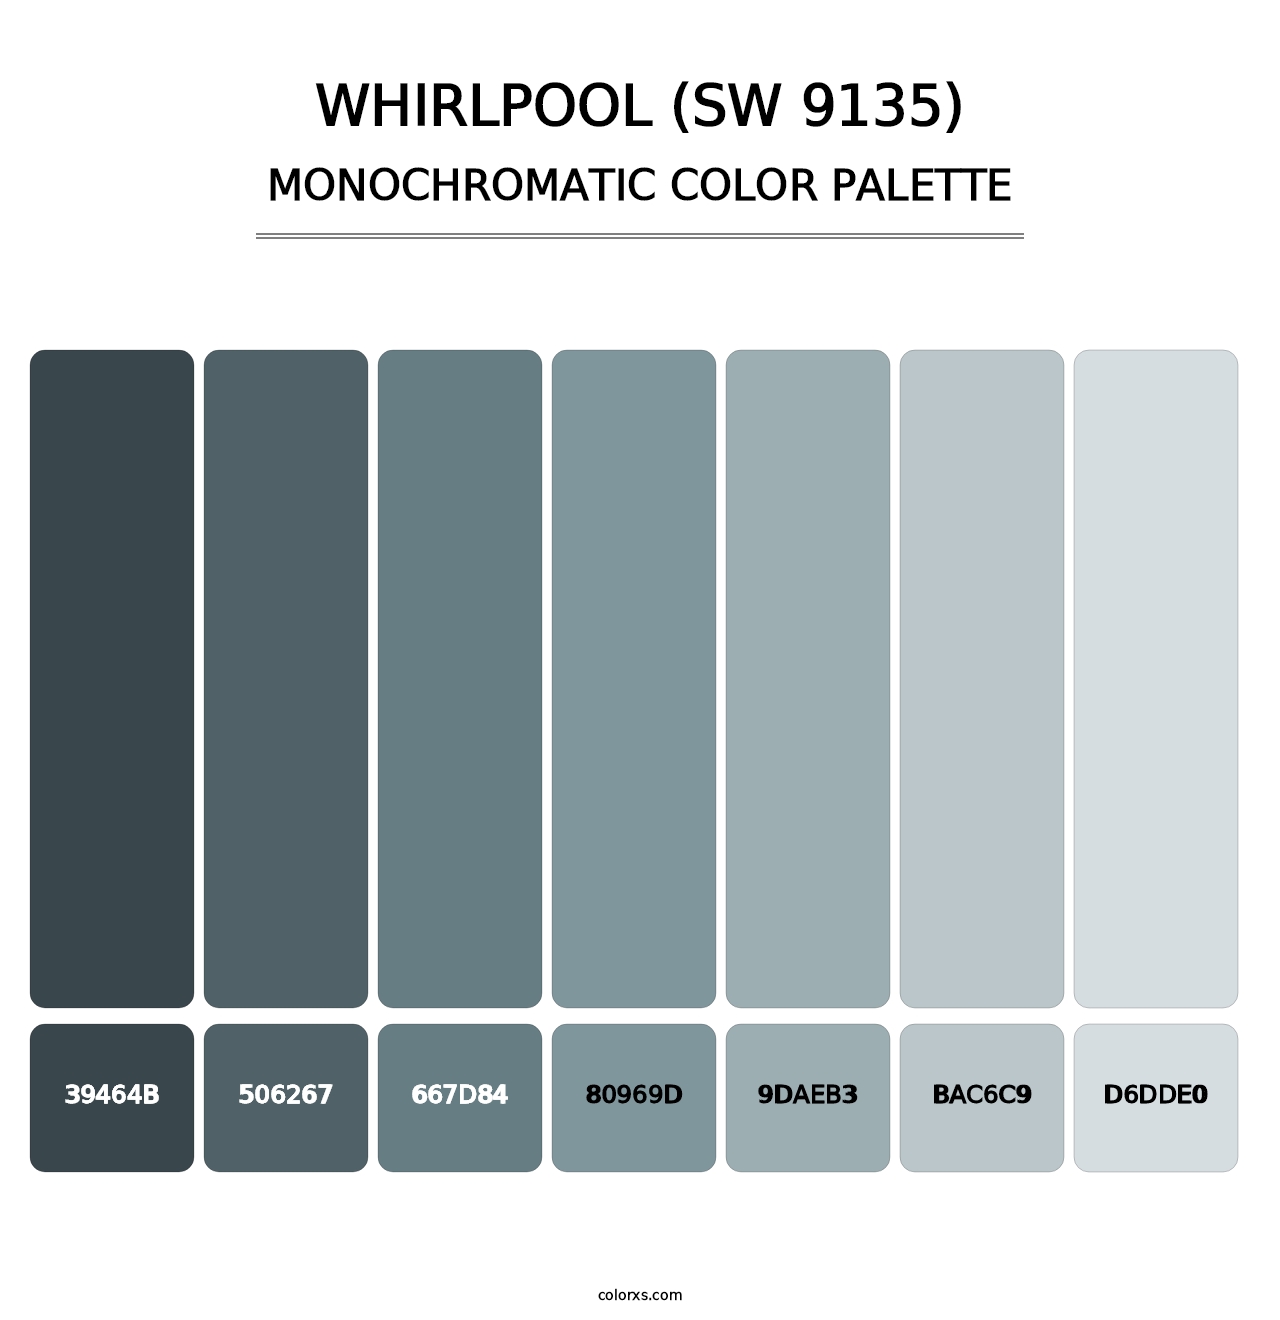 Whirlpool (SW 9135) - Monochromatic Color Palette